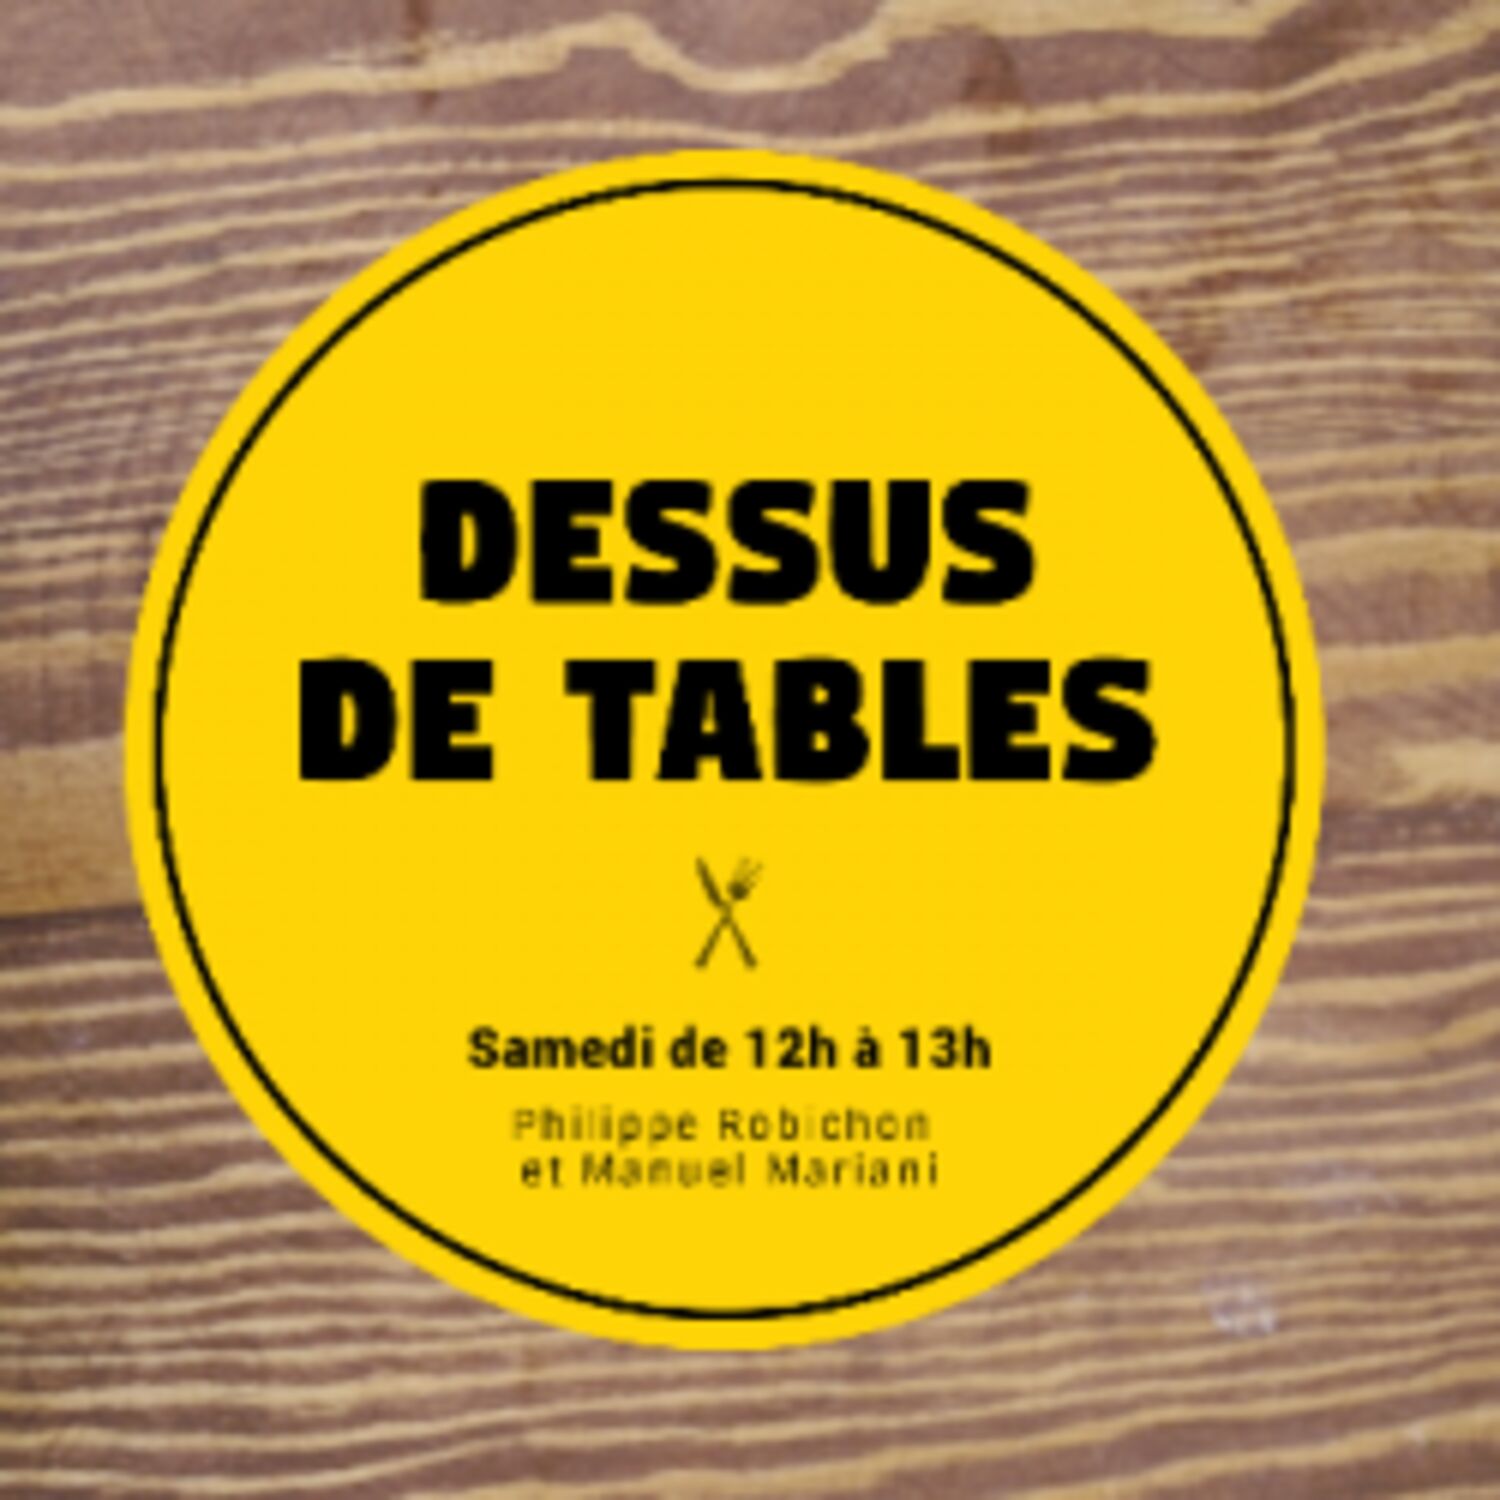 Dessus de tables 03-04-2021